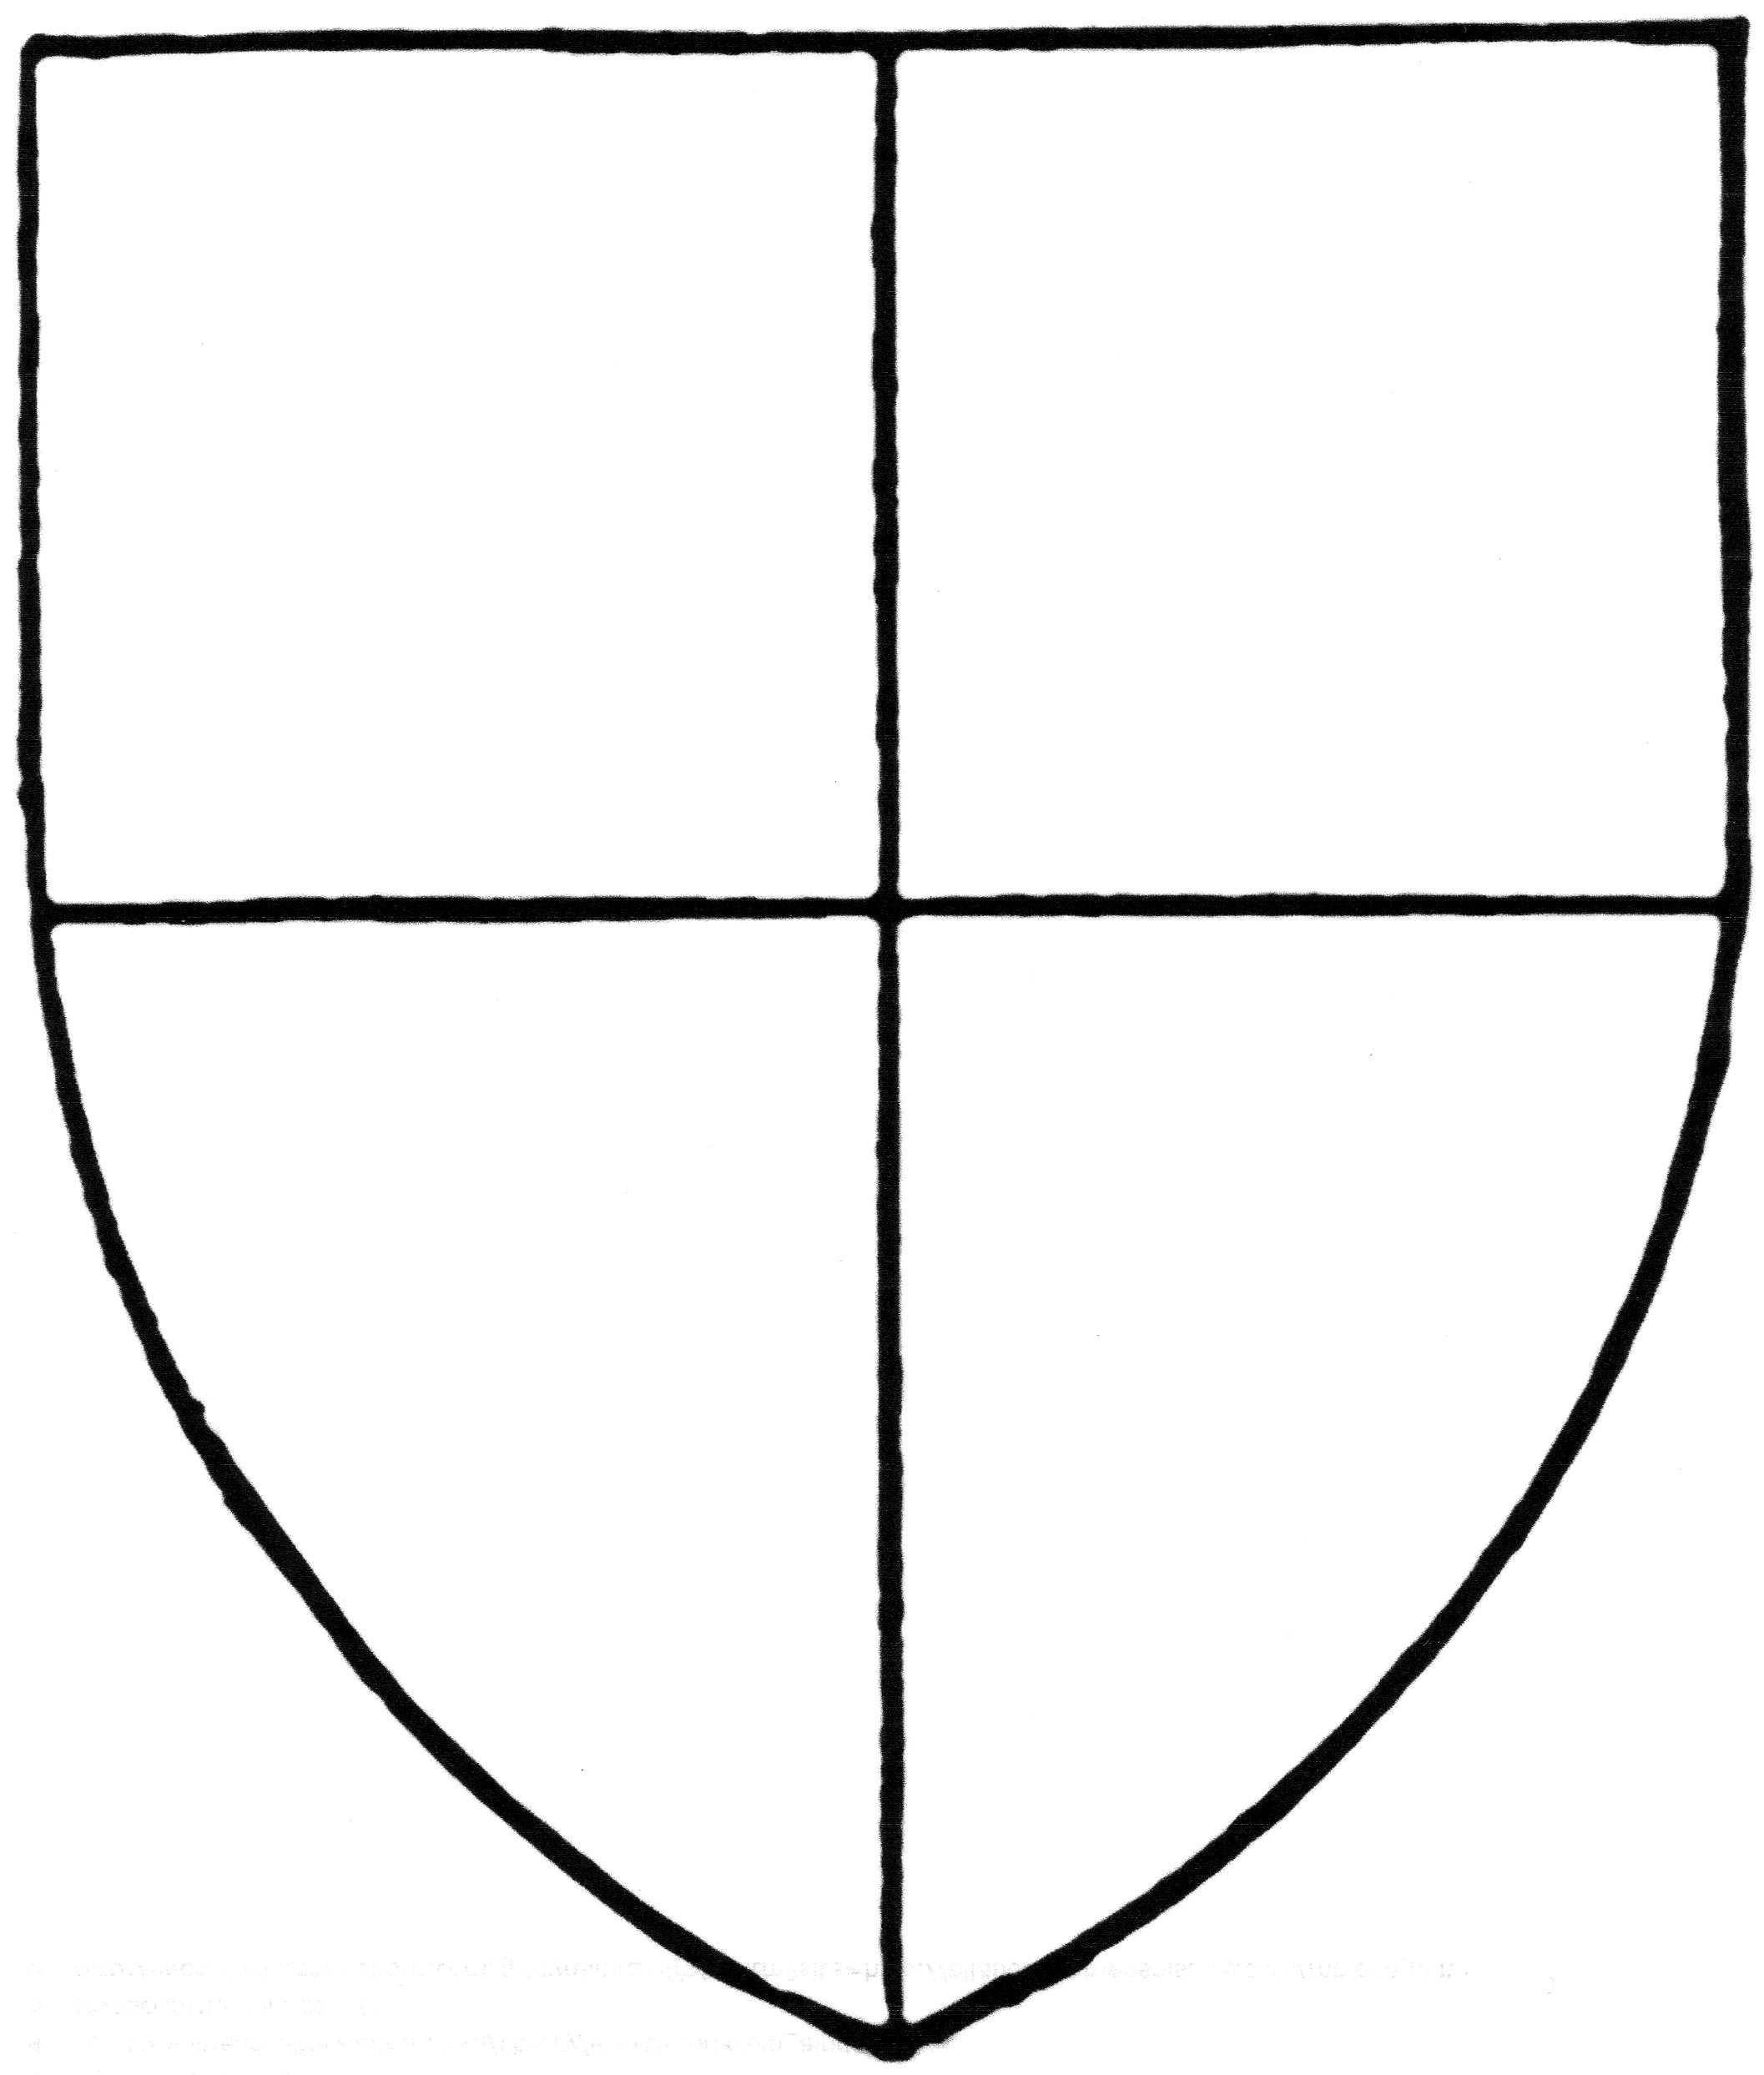 Printable Coat Of Arms Symbols